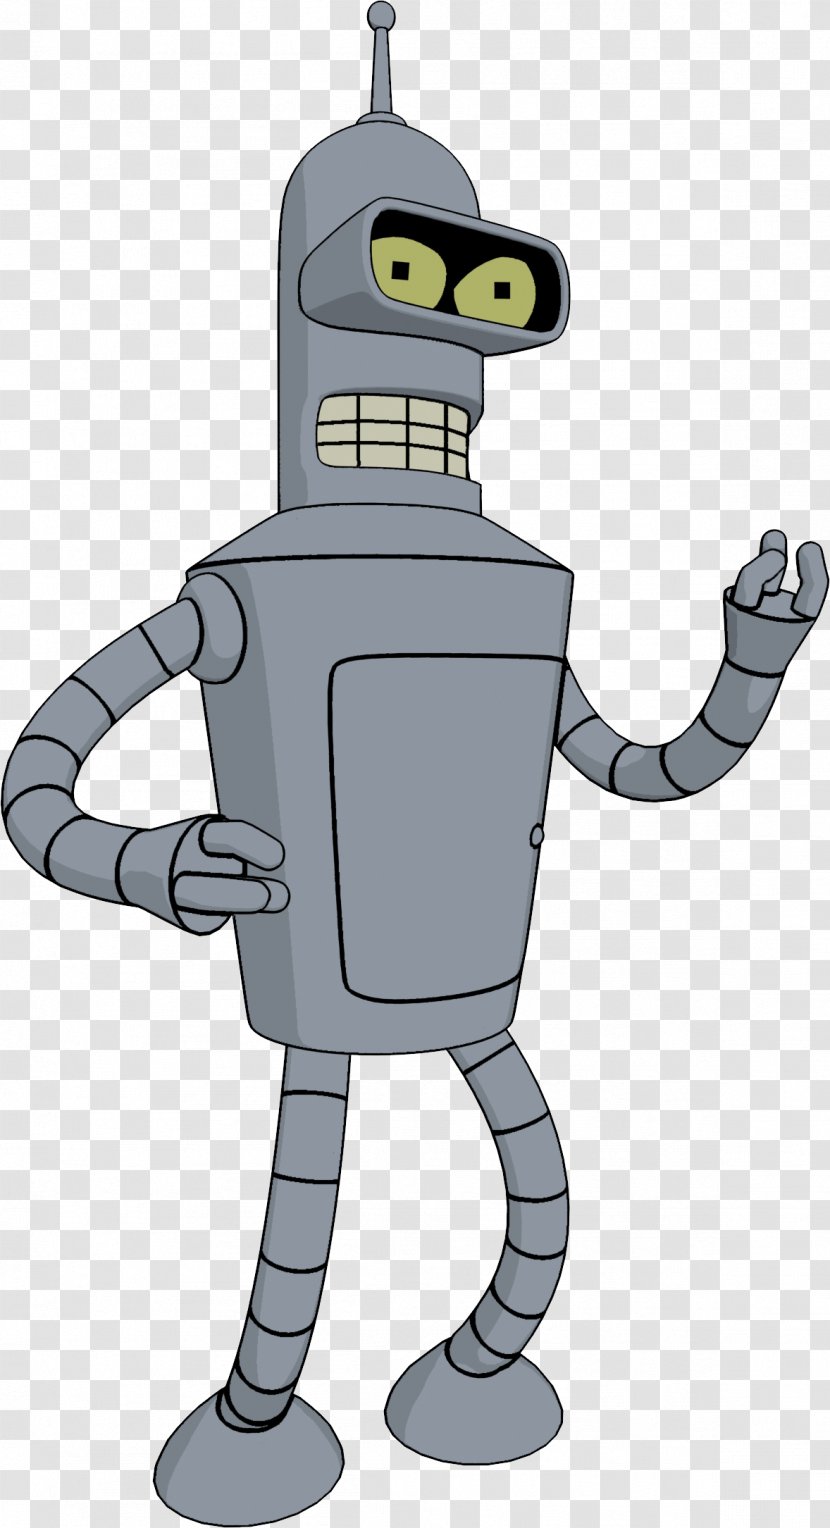 Bender Futurama Philip J. Fry Planet Express Ship - Robot Transparent PNG